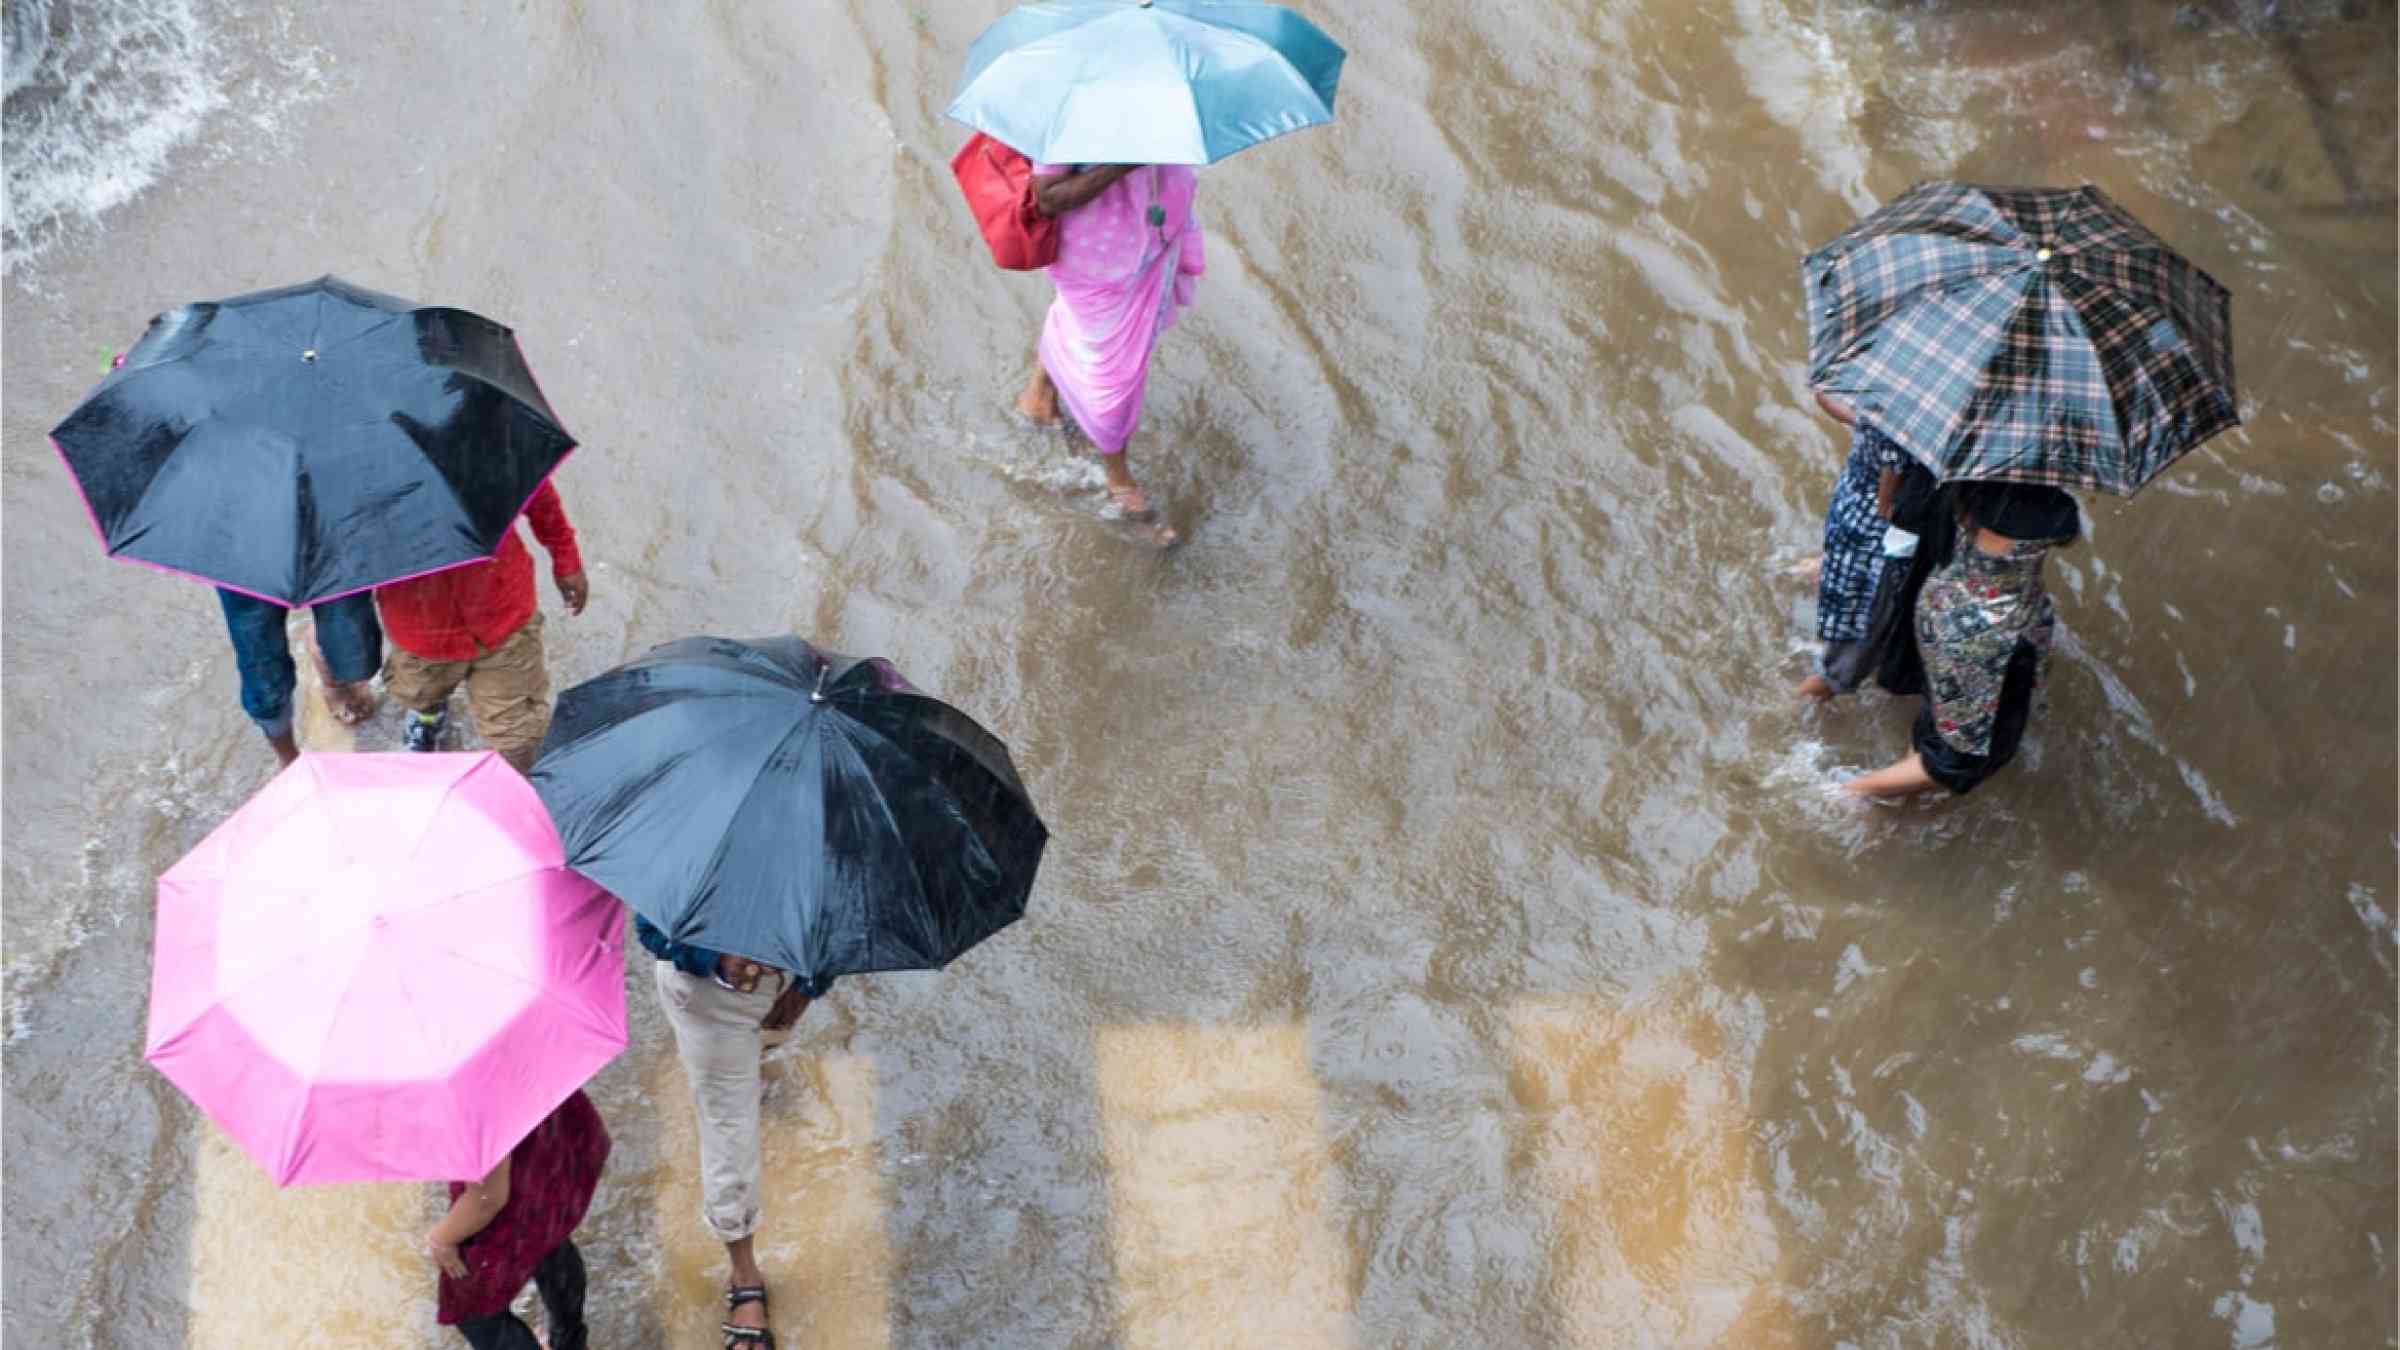 People crossing road with umbrella in rain at Matunga in Mumbai Maharashtra India